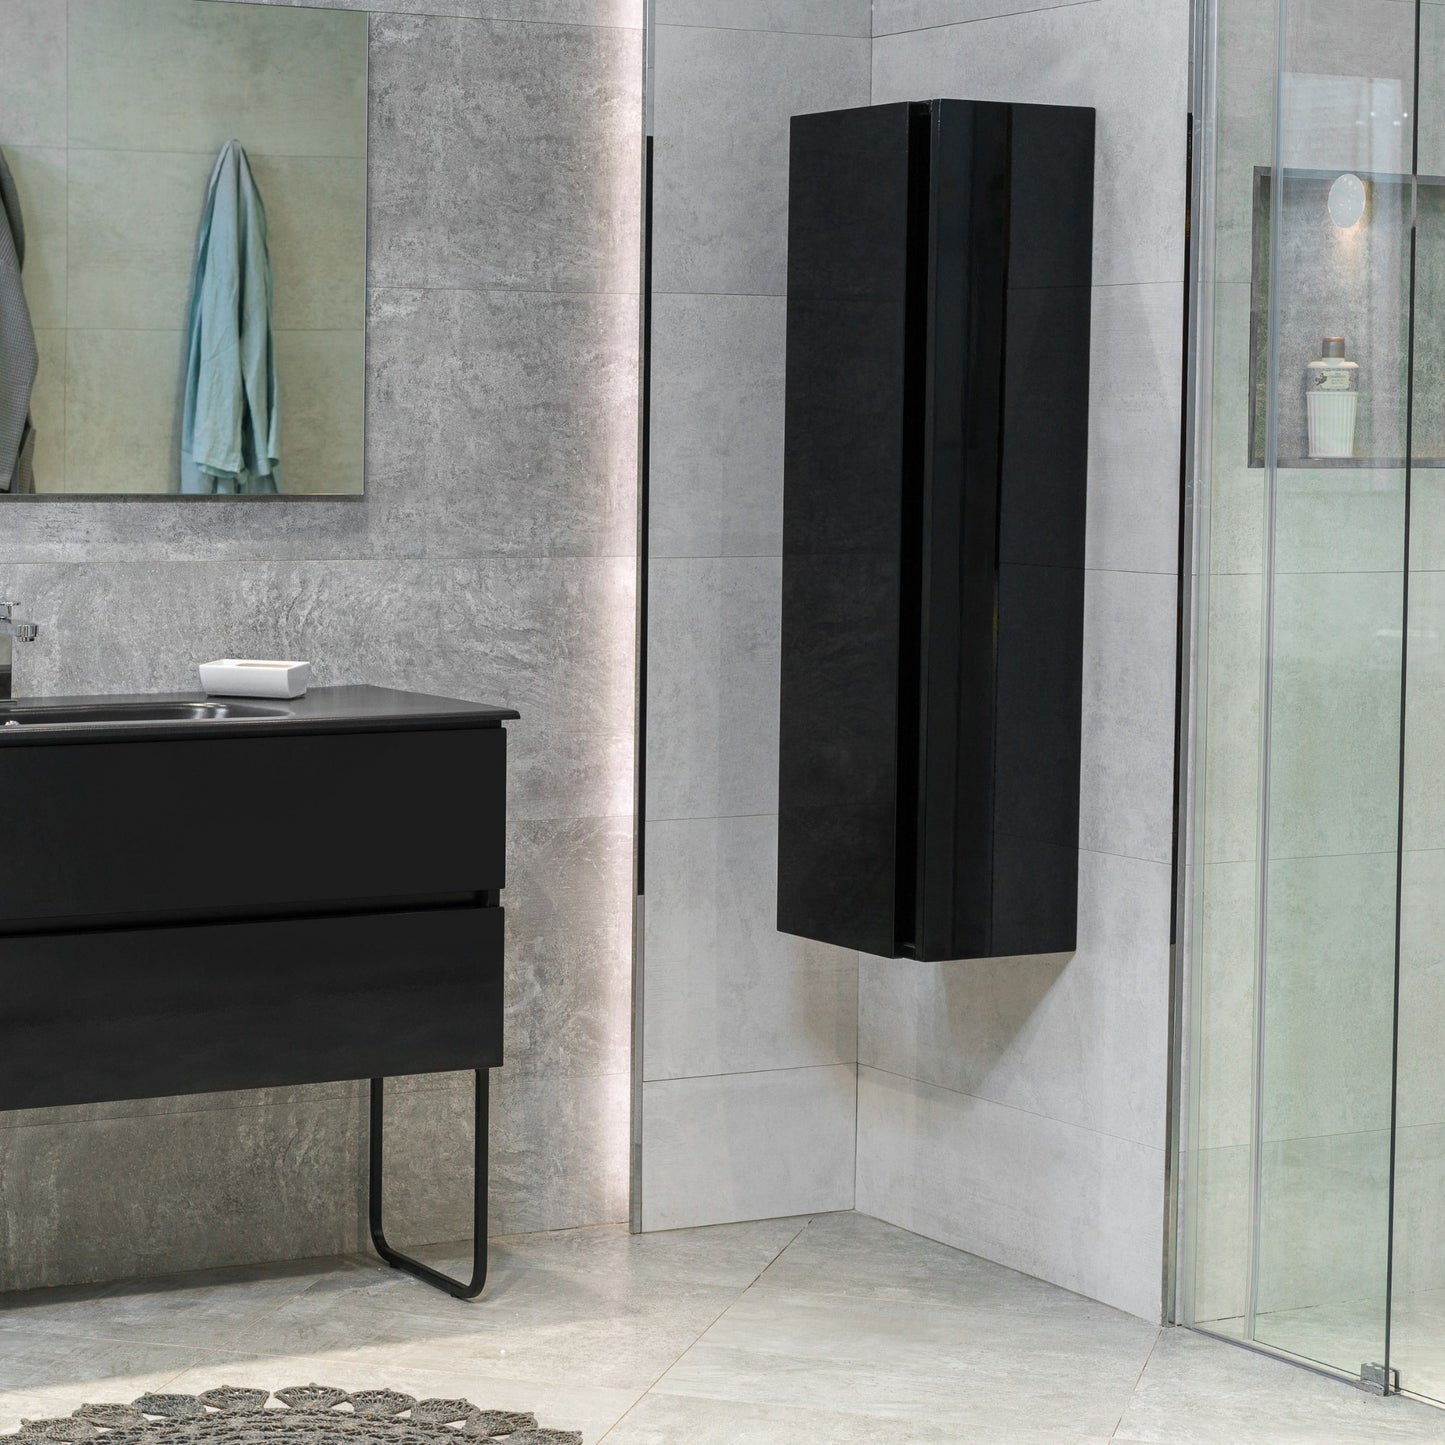 48 Inch High Gloss Black Veneto Floating Bathroom Vanity